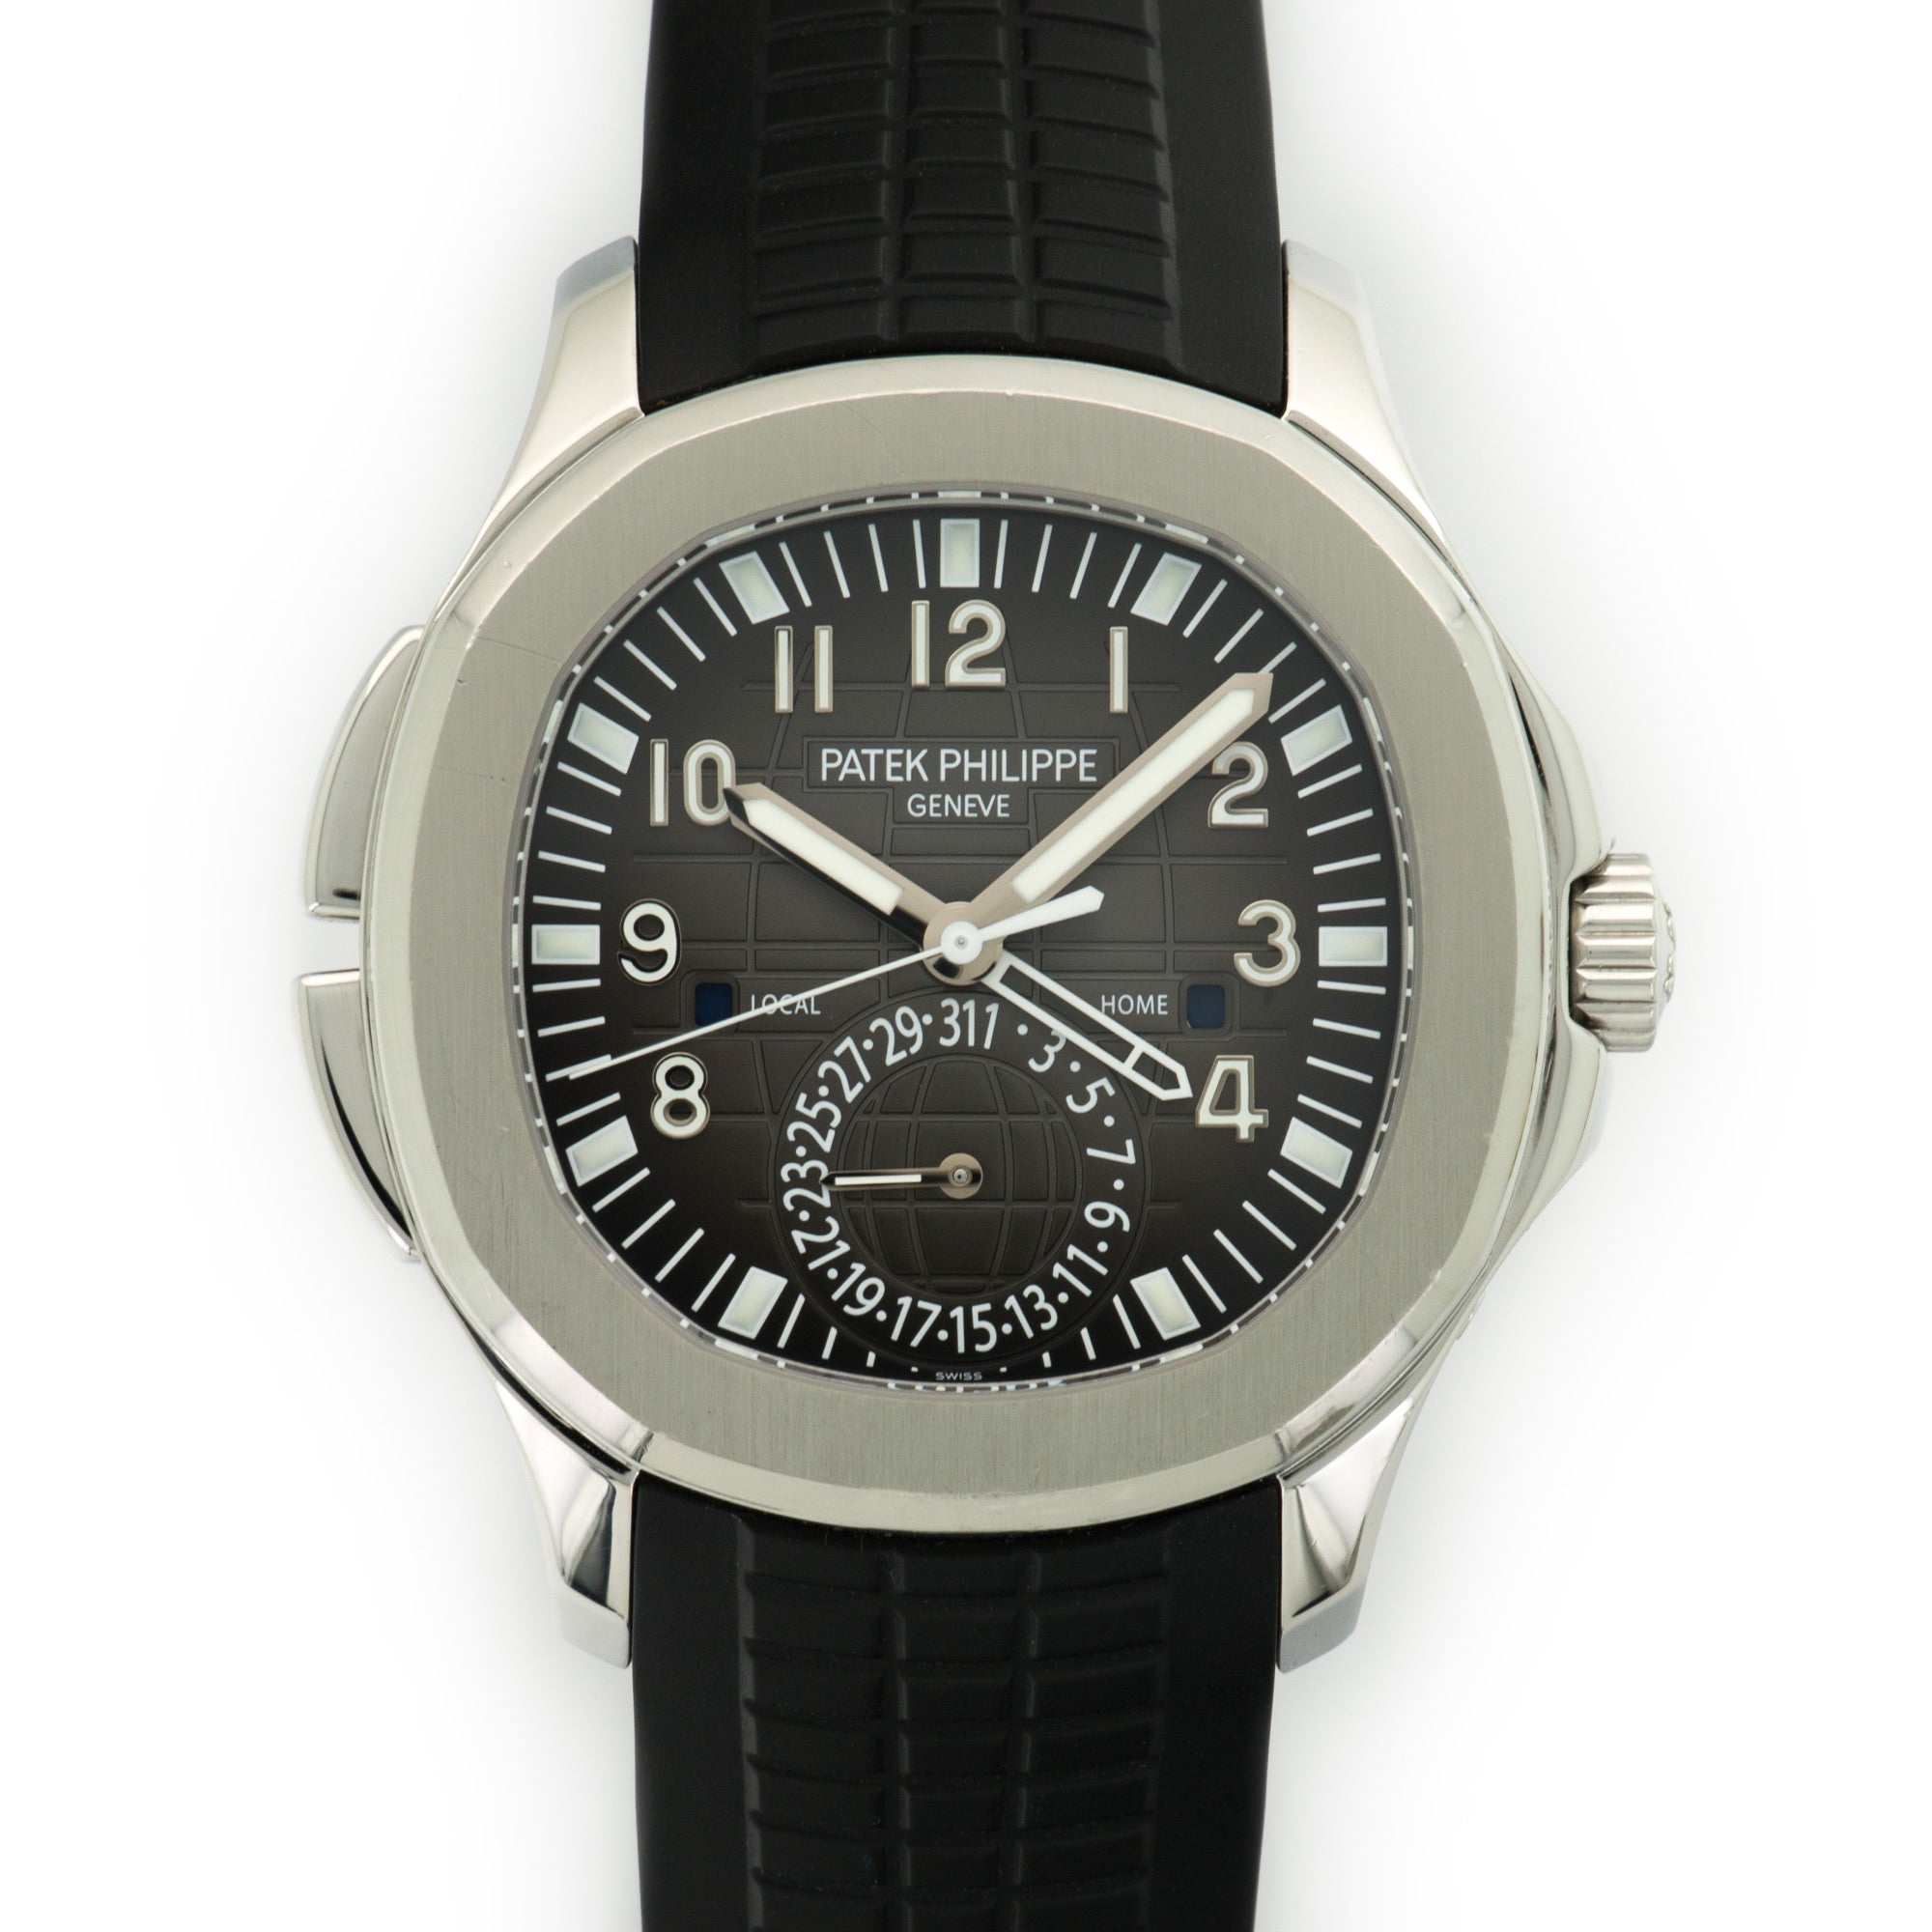 Patek Philippe - Patek Philippe Aquanaut Travel Time Watch Ref. 5164a - The Keystone Watches